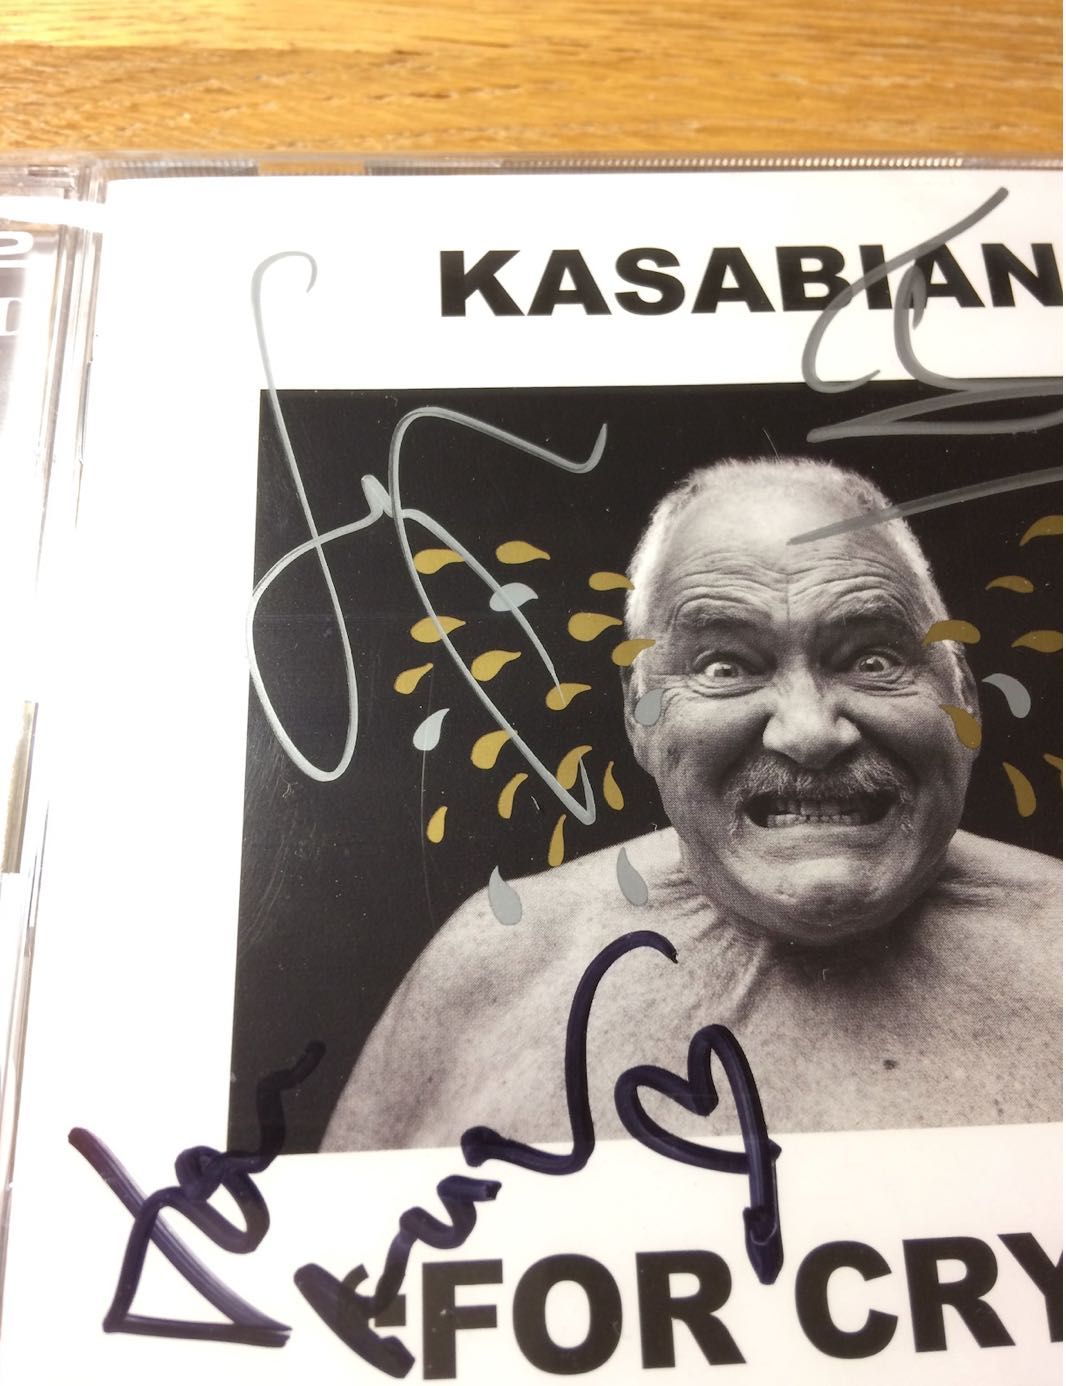 KASABIAN For Crying Out Loud CD PODPISANA Autograf